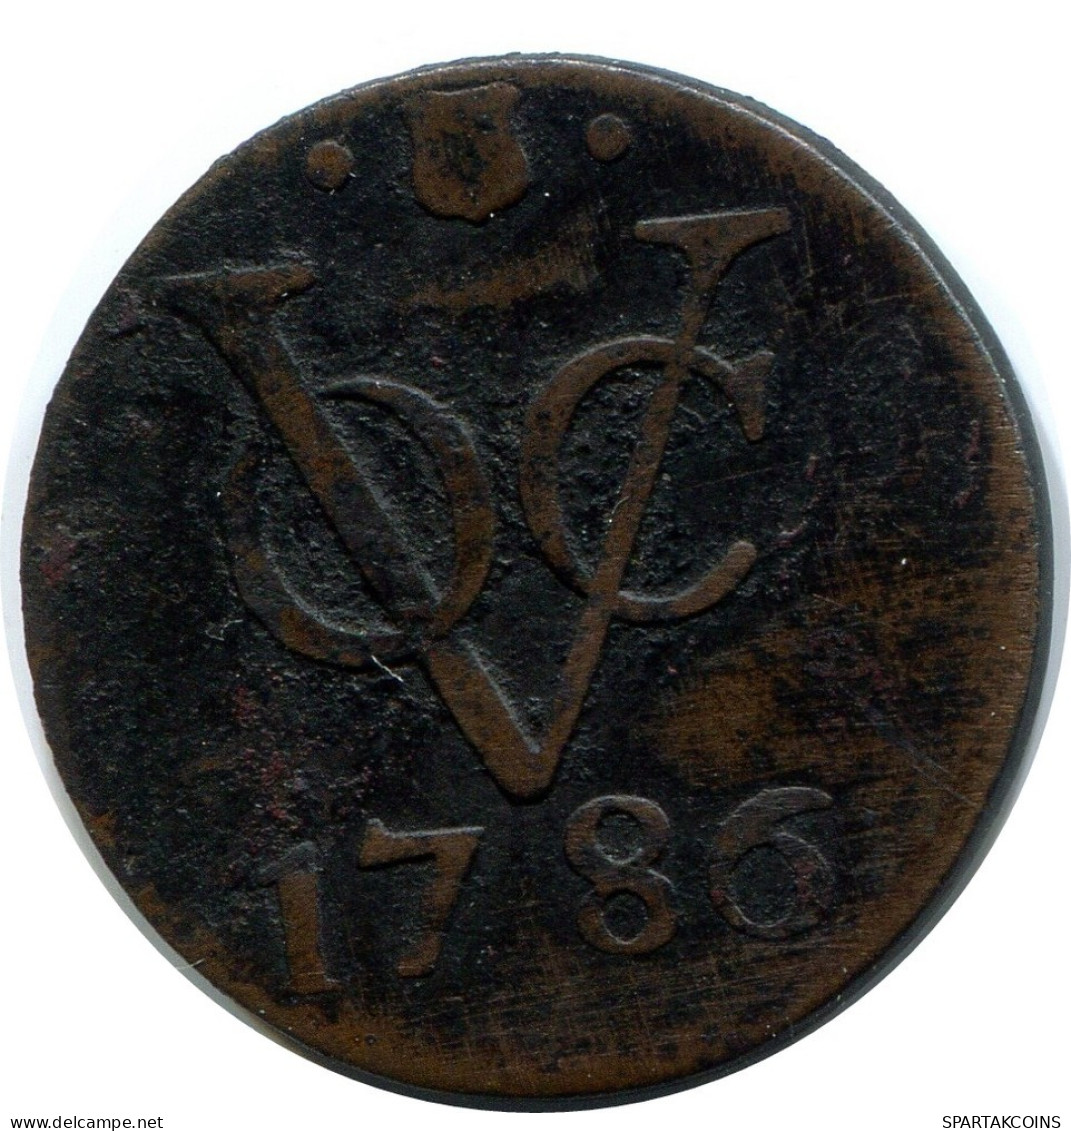 1786 UTRECHT VOC DUIT NEERLANDÉS NETHERLANDS INDIES #VOC1490.11.E.A - Dutch East Indies